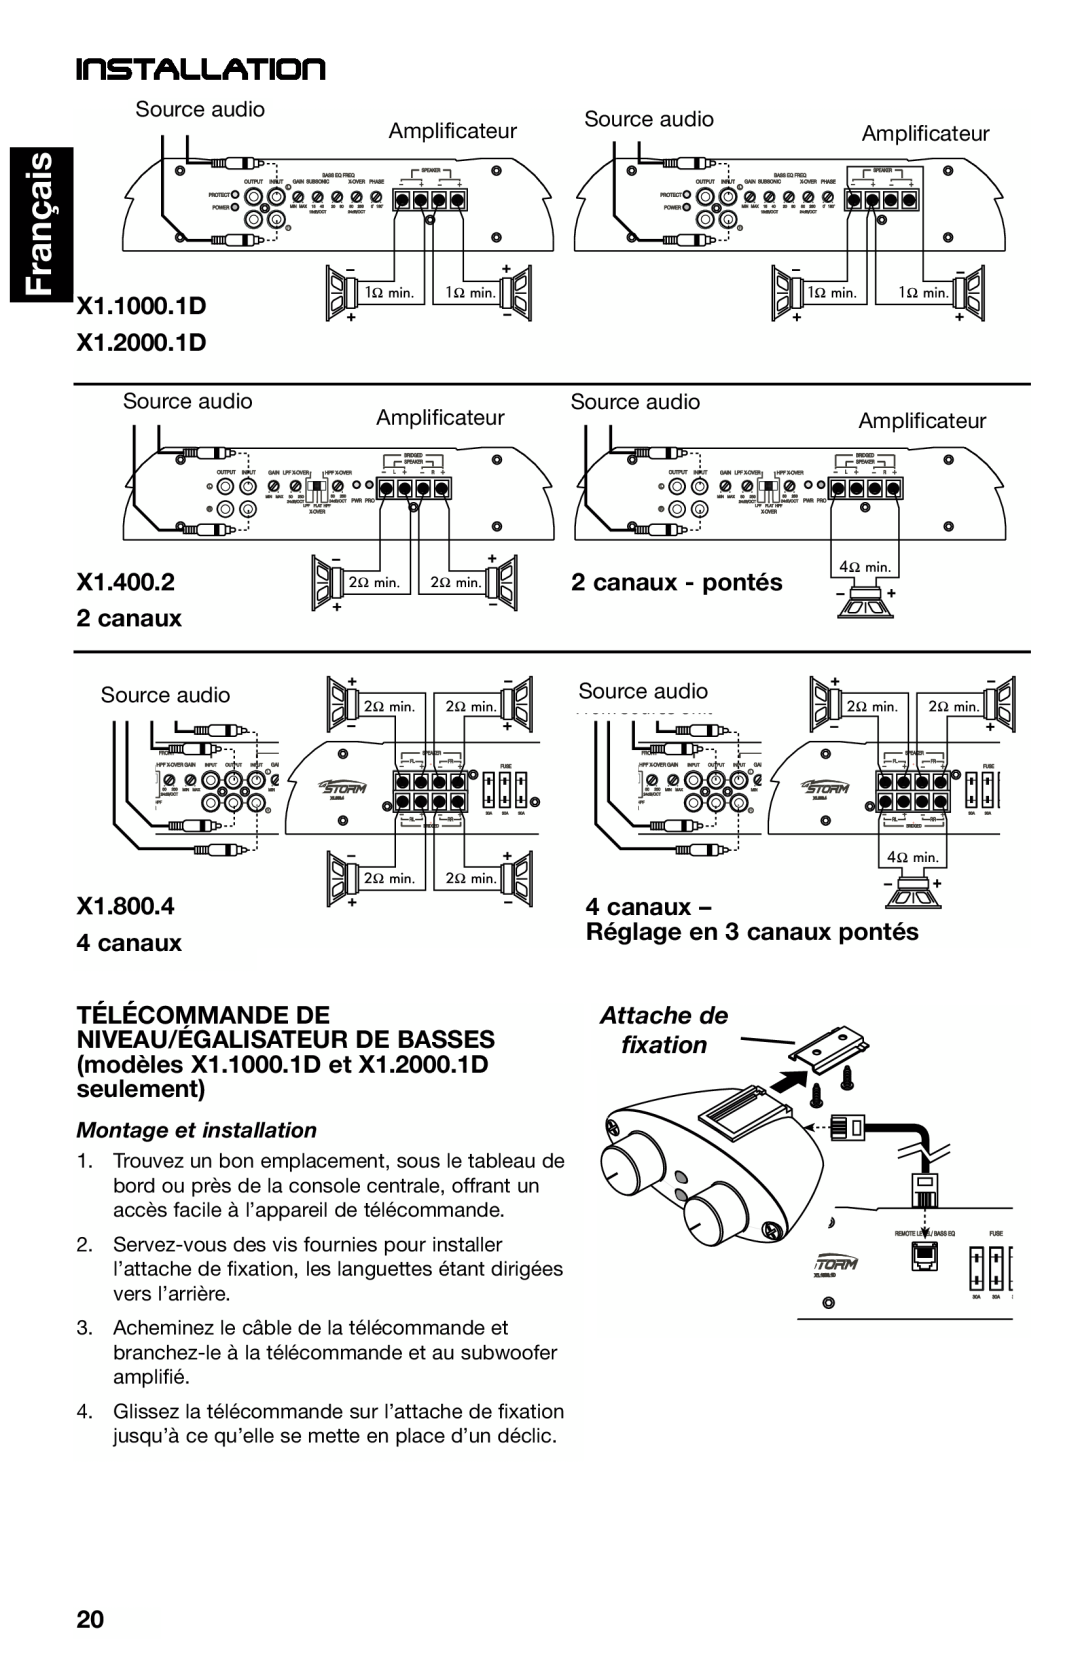 Lightning Audio X1.800.4 manual Français, Installation, X1.1000.1D X1.2000.1D, X1.400.2 2 canaux, canaux - pontés 